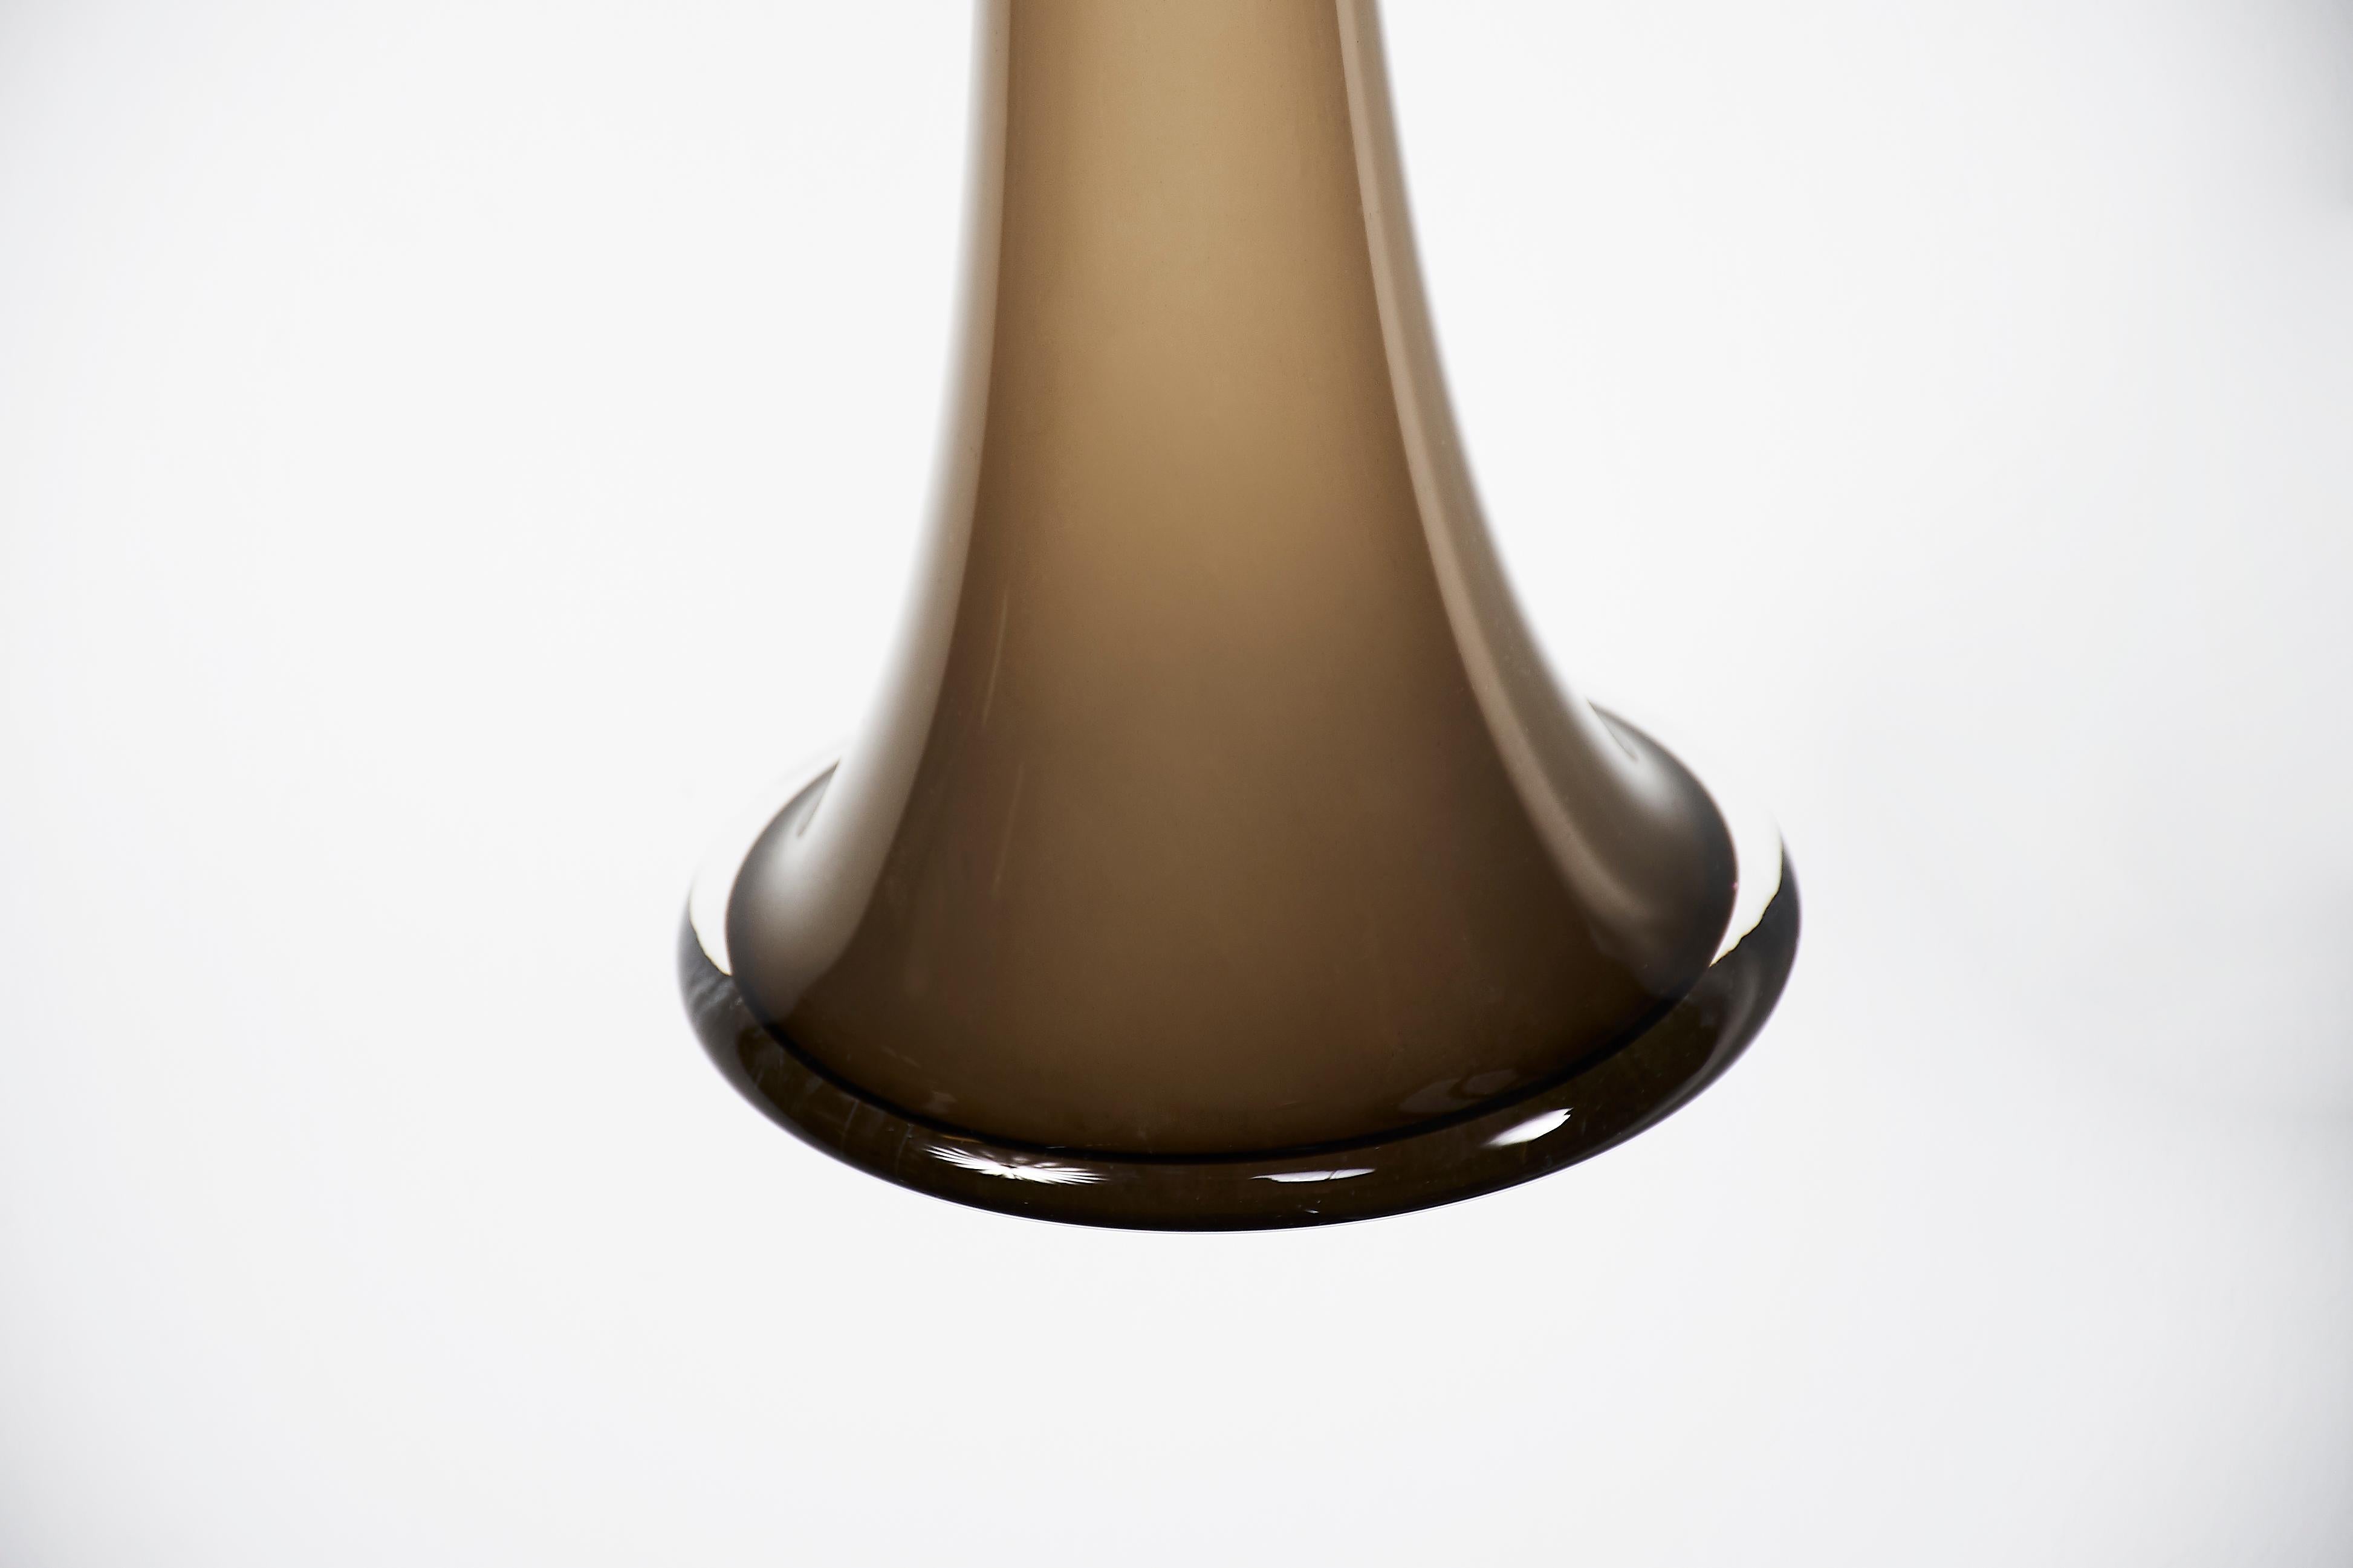 Italian Exquisite Murano Glass Mid-Century Modern Tulip Floor Vase Monumentally Tall For Sale